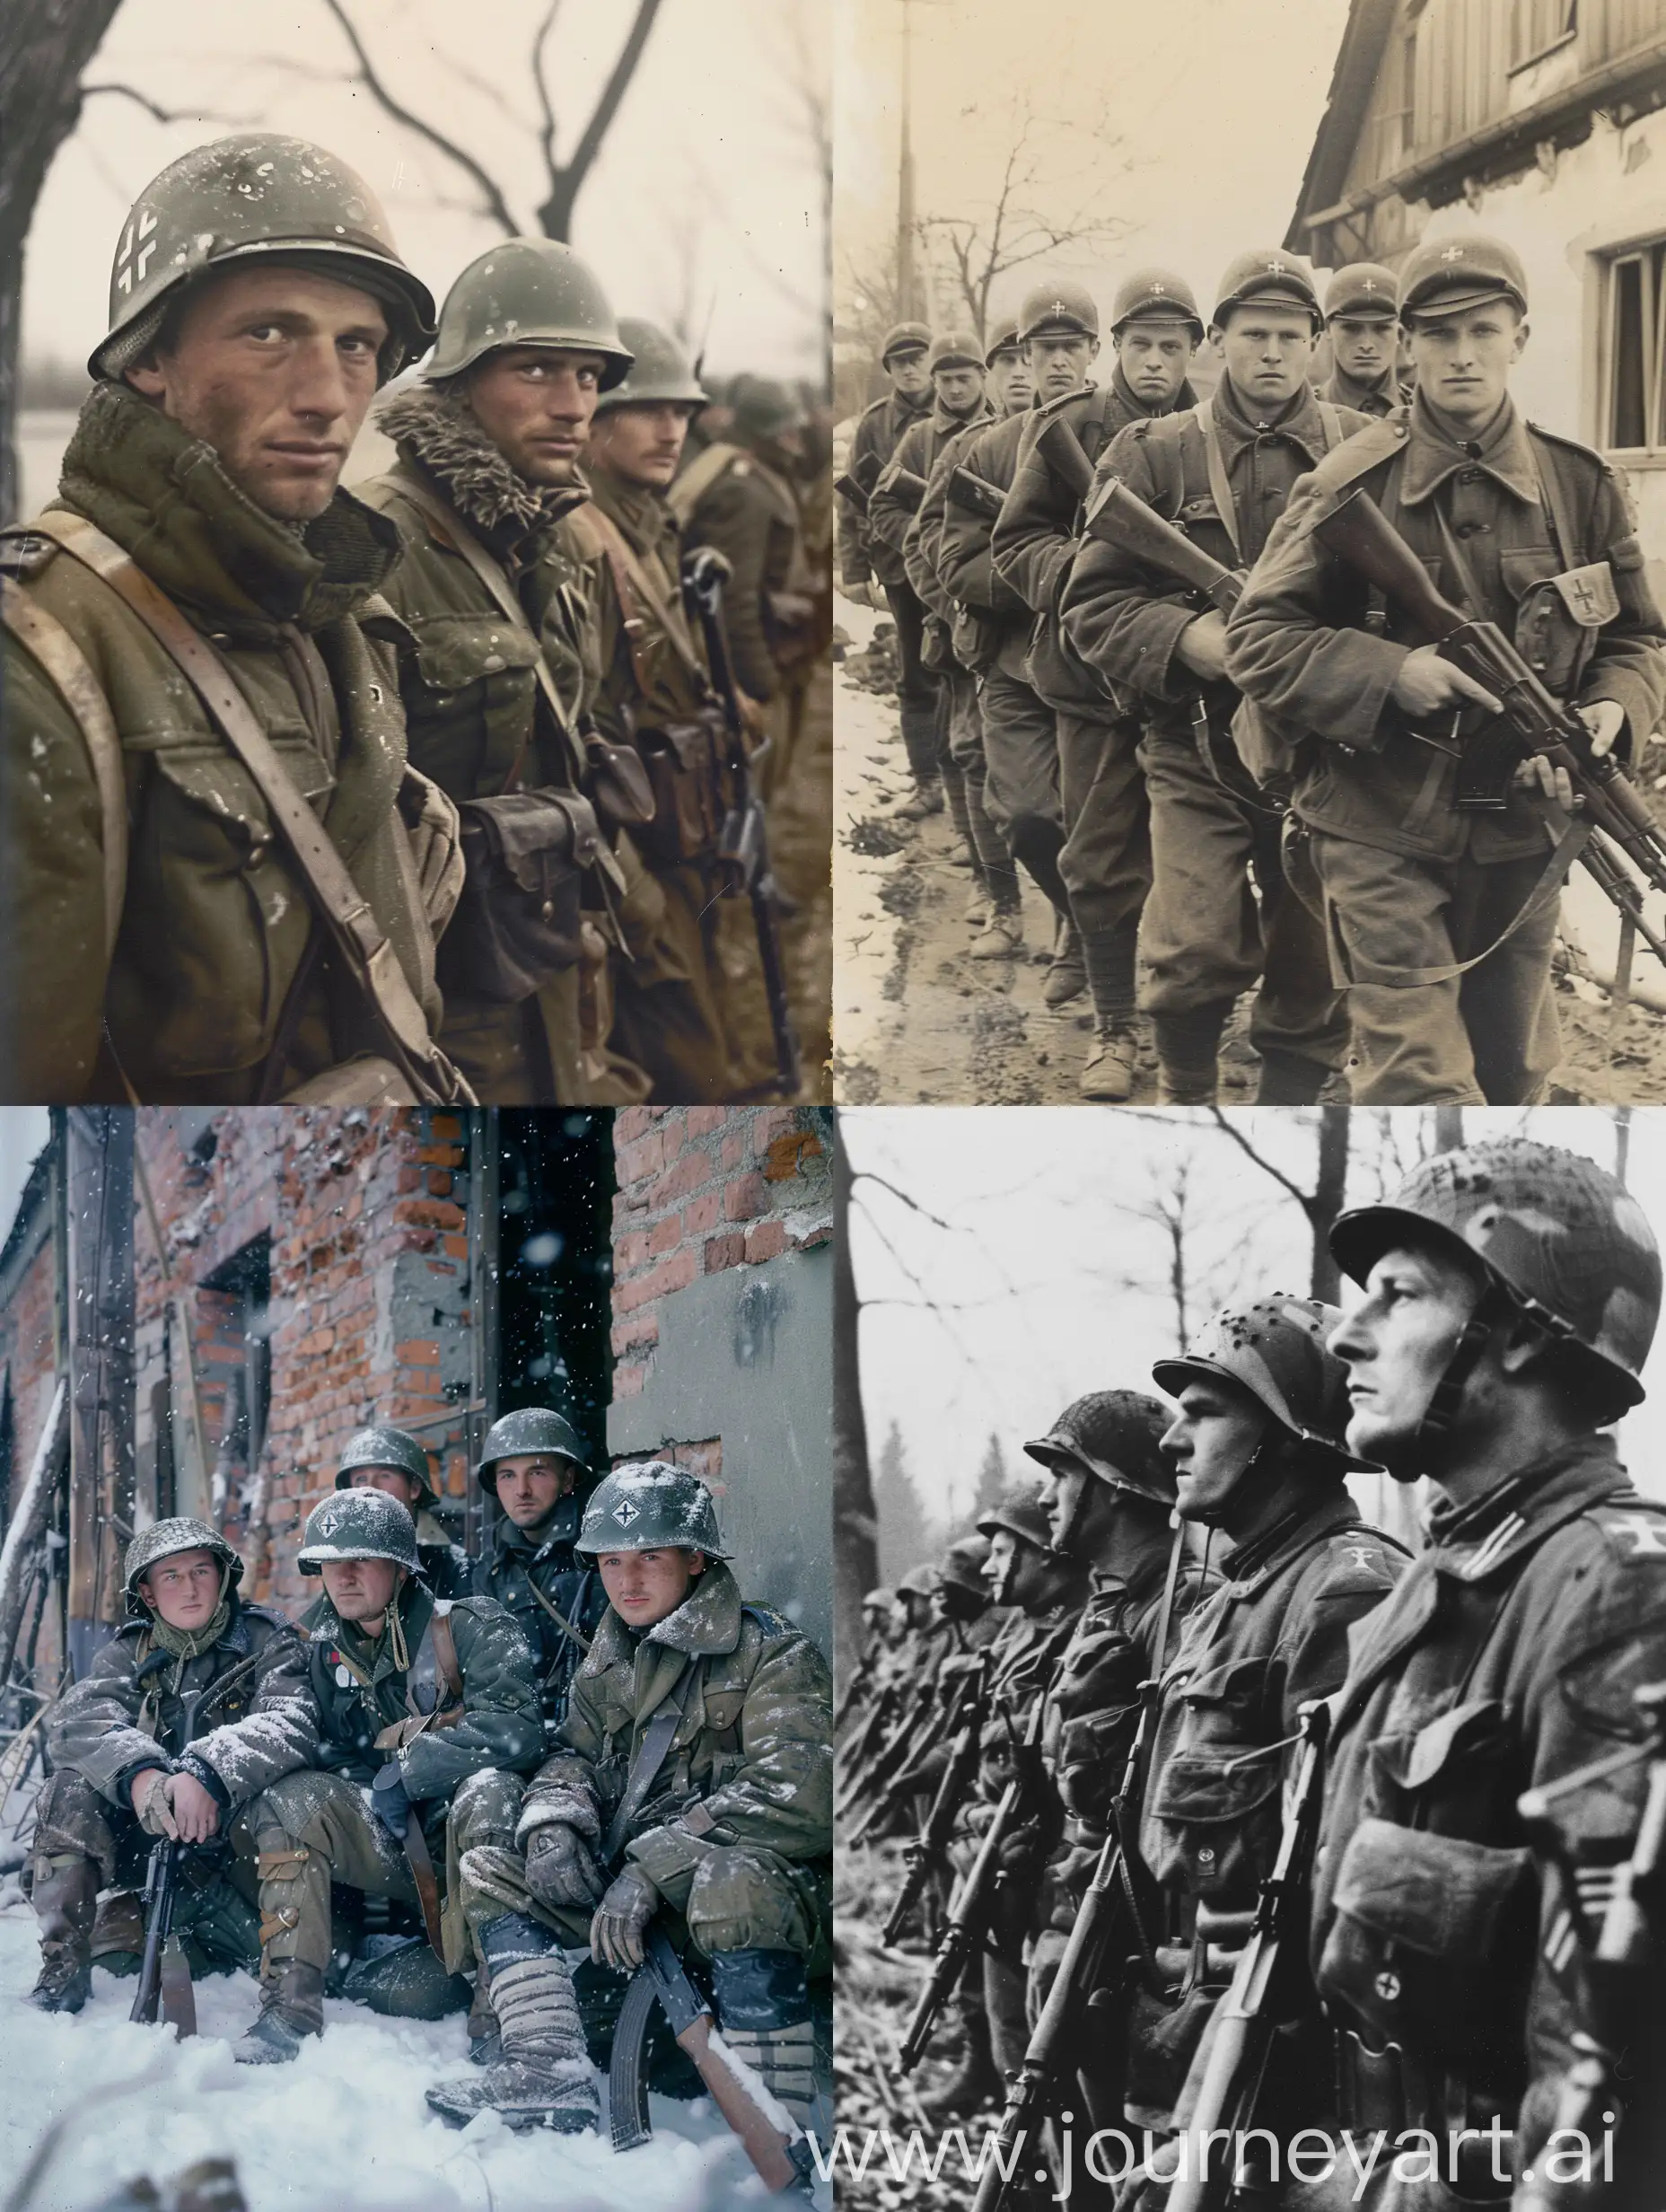 photo of 1943 German soldiers